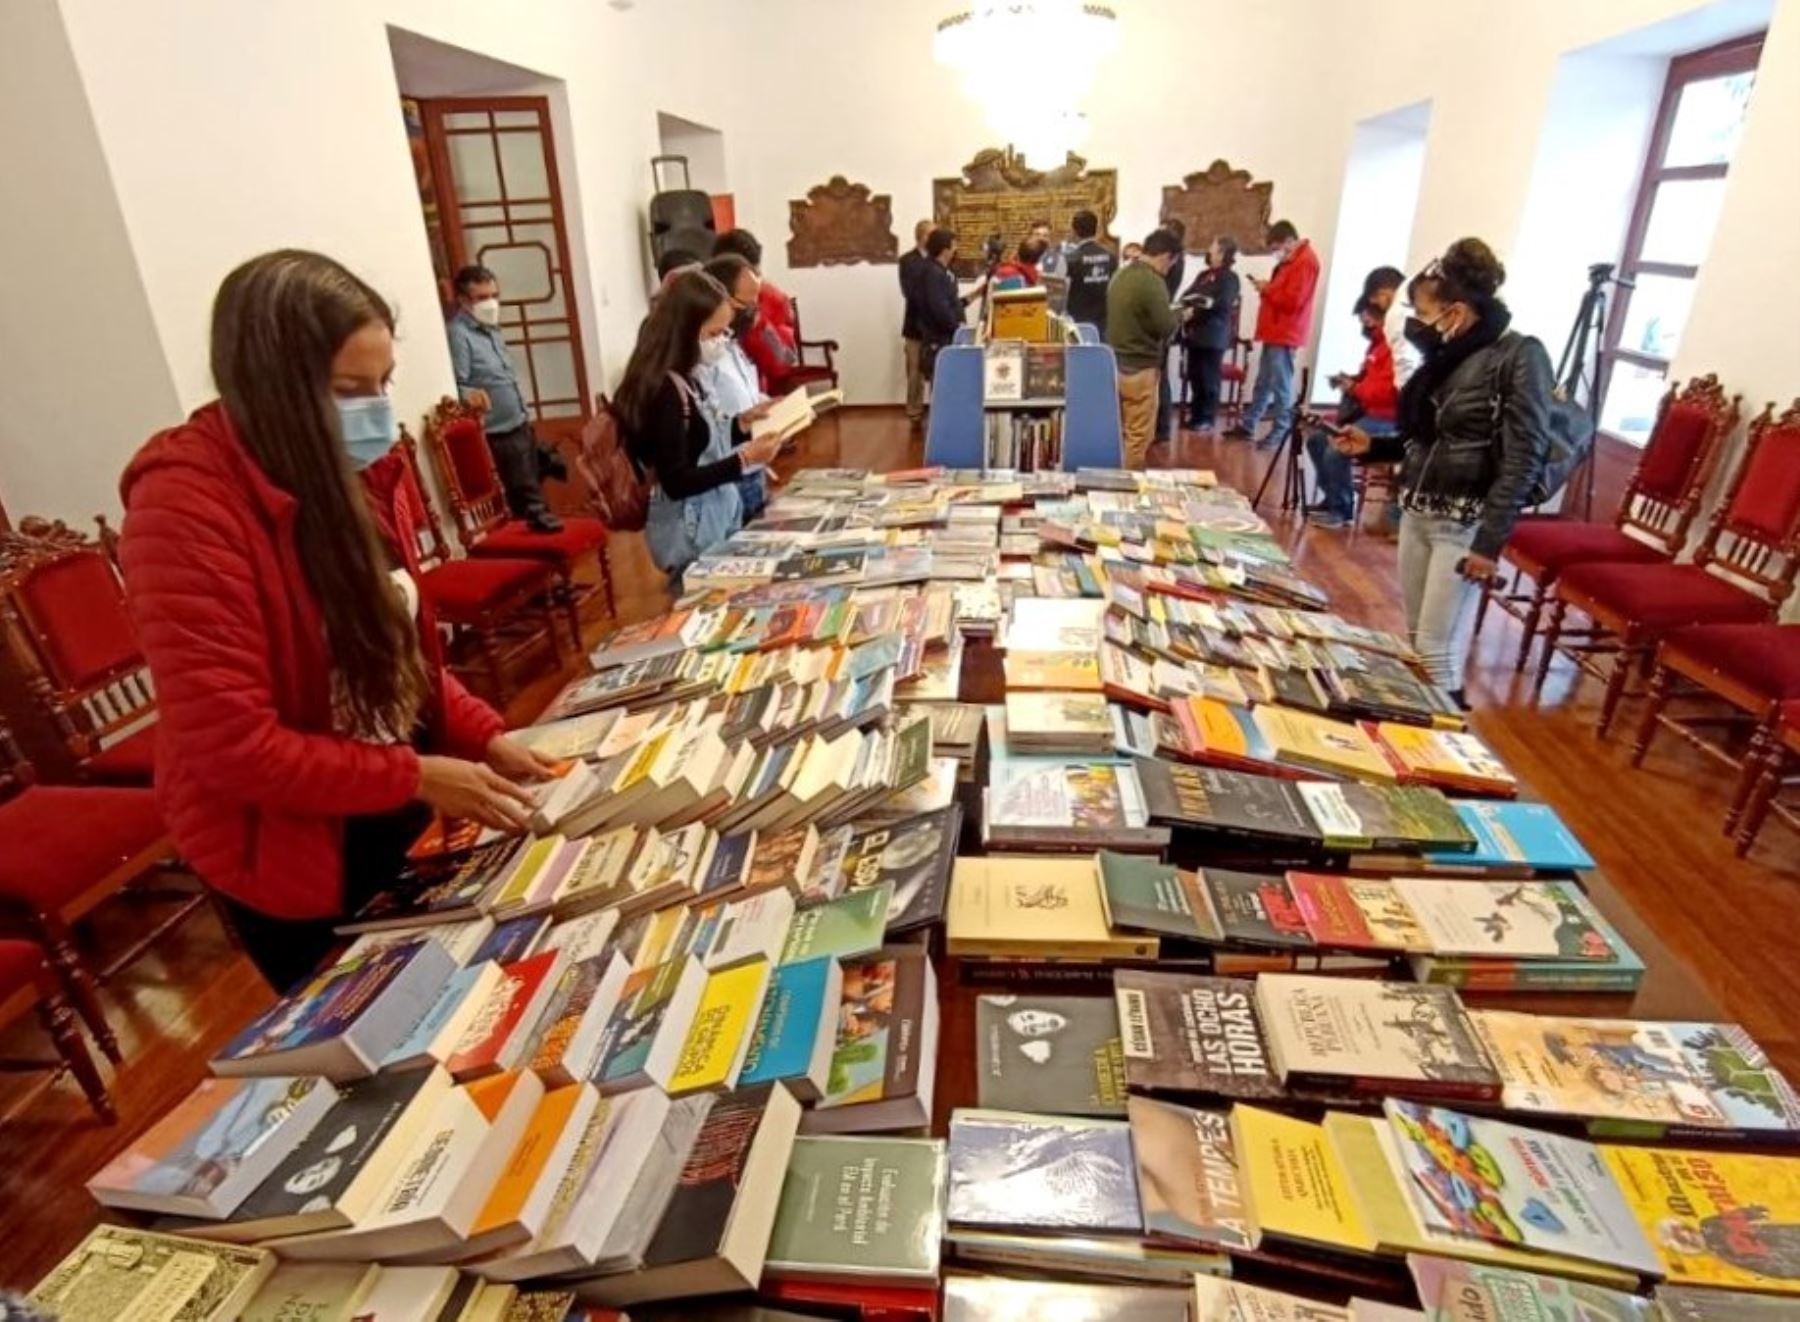 La Biblioteca Nacional del Perú donó más de 700 libros a la Biblioteca Municipal de Cajamarca, destacó el alcalde provincial, Andrés Villar. ANDINA/Difusión